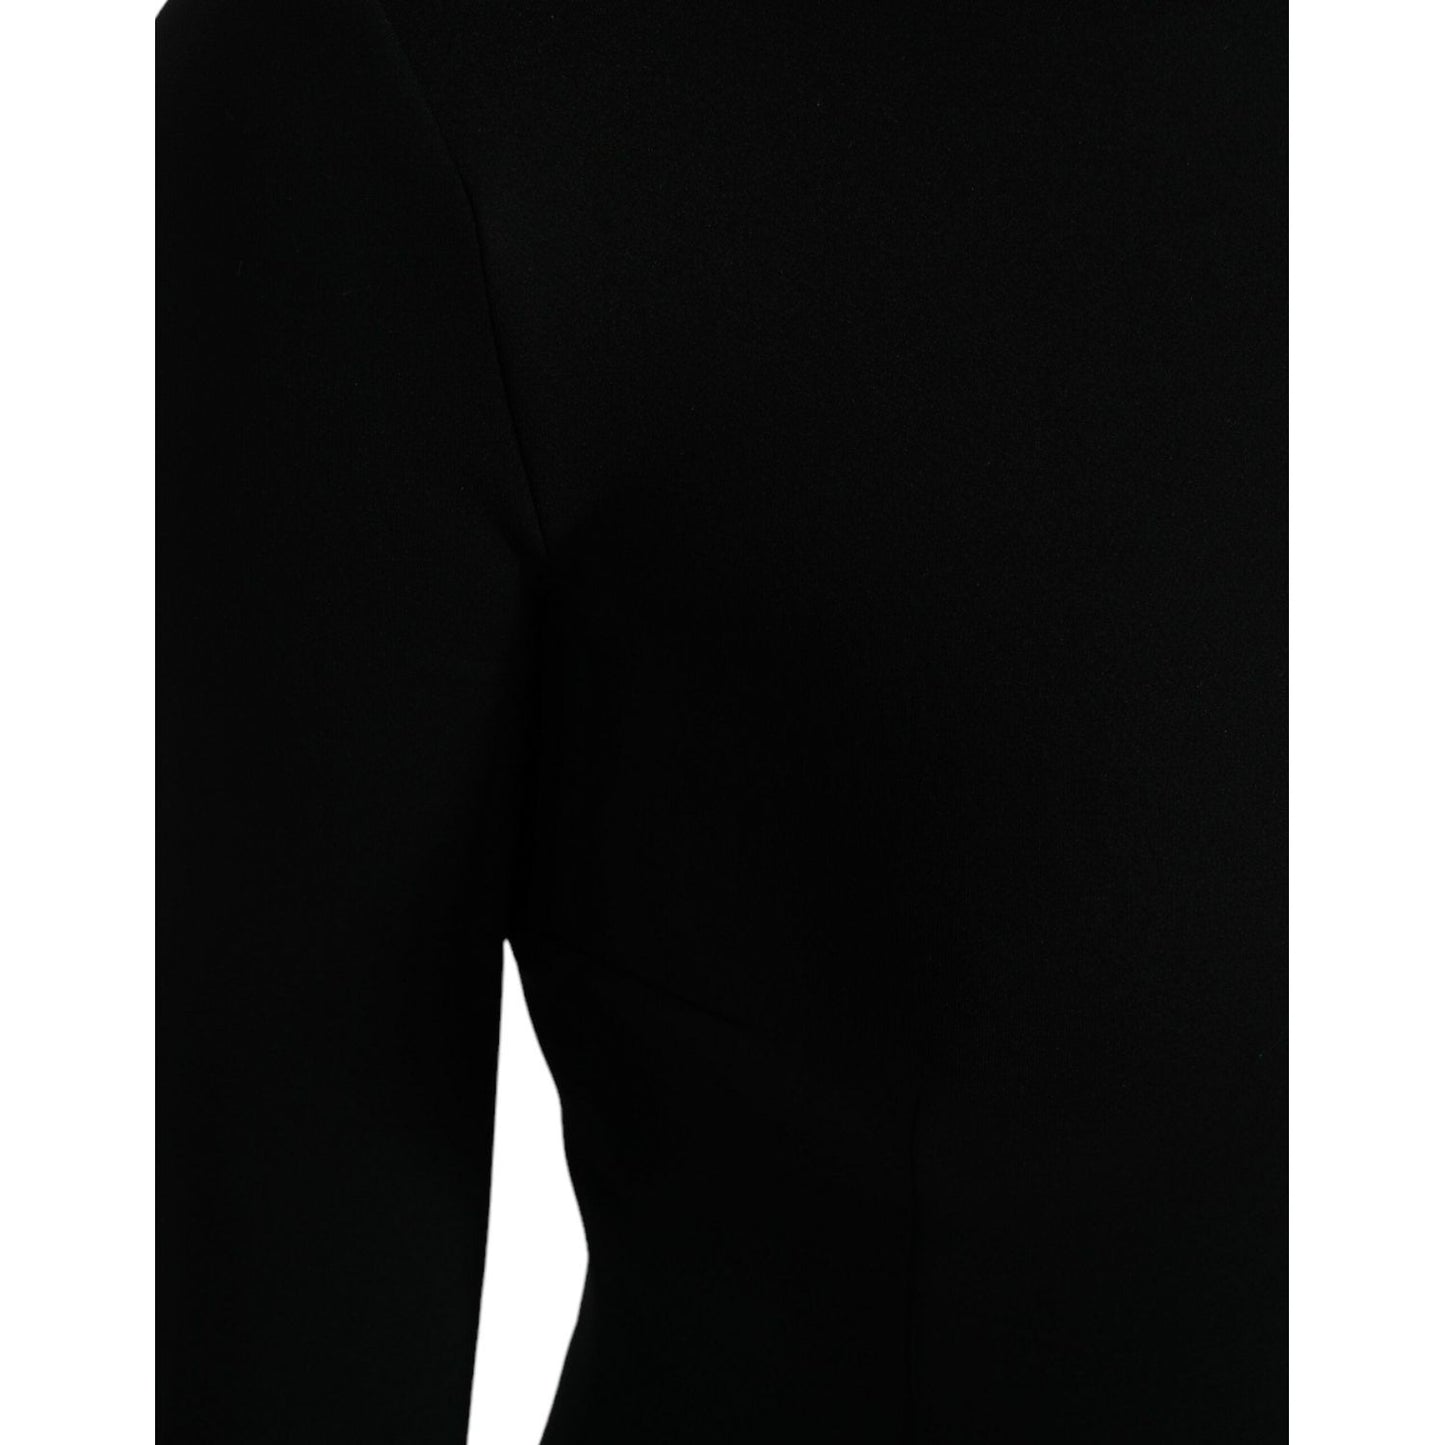 Dolce & Gabbana Elegant Black Bodycon Turtleneck Dress black-long-sleeve-turtleneck-bodycon-dress